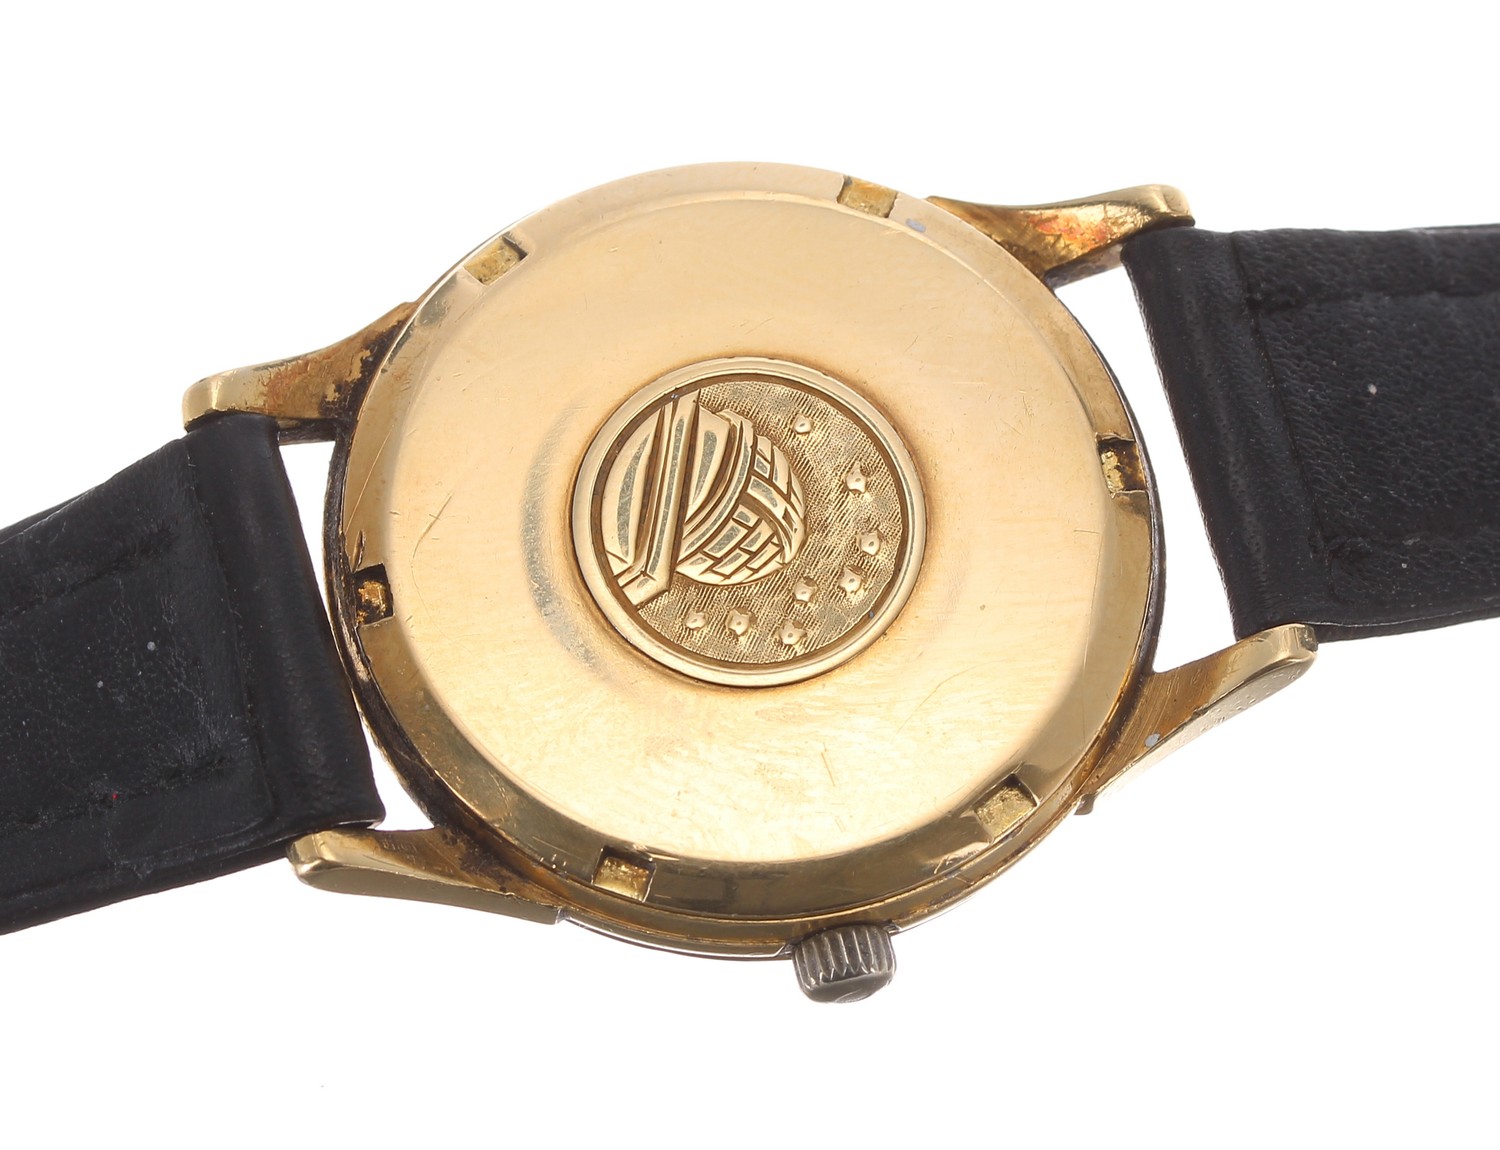 Omega Constellation Chronometer automatic 18ct gentleman's wristwatch, ref. 1685415, Birmingham - Image 2 of 3